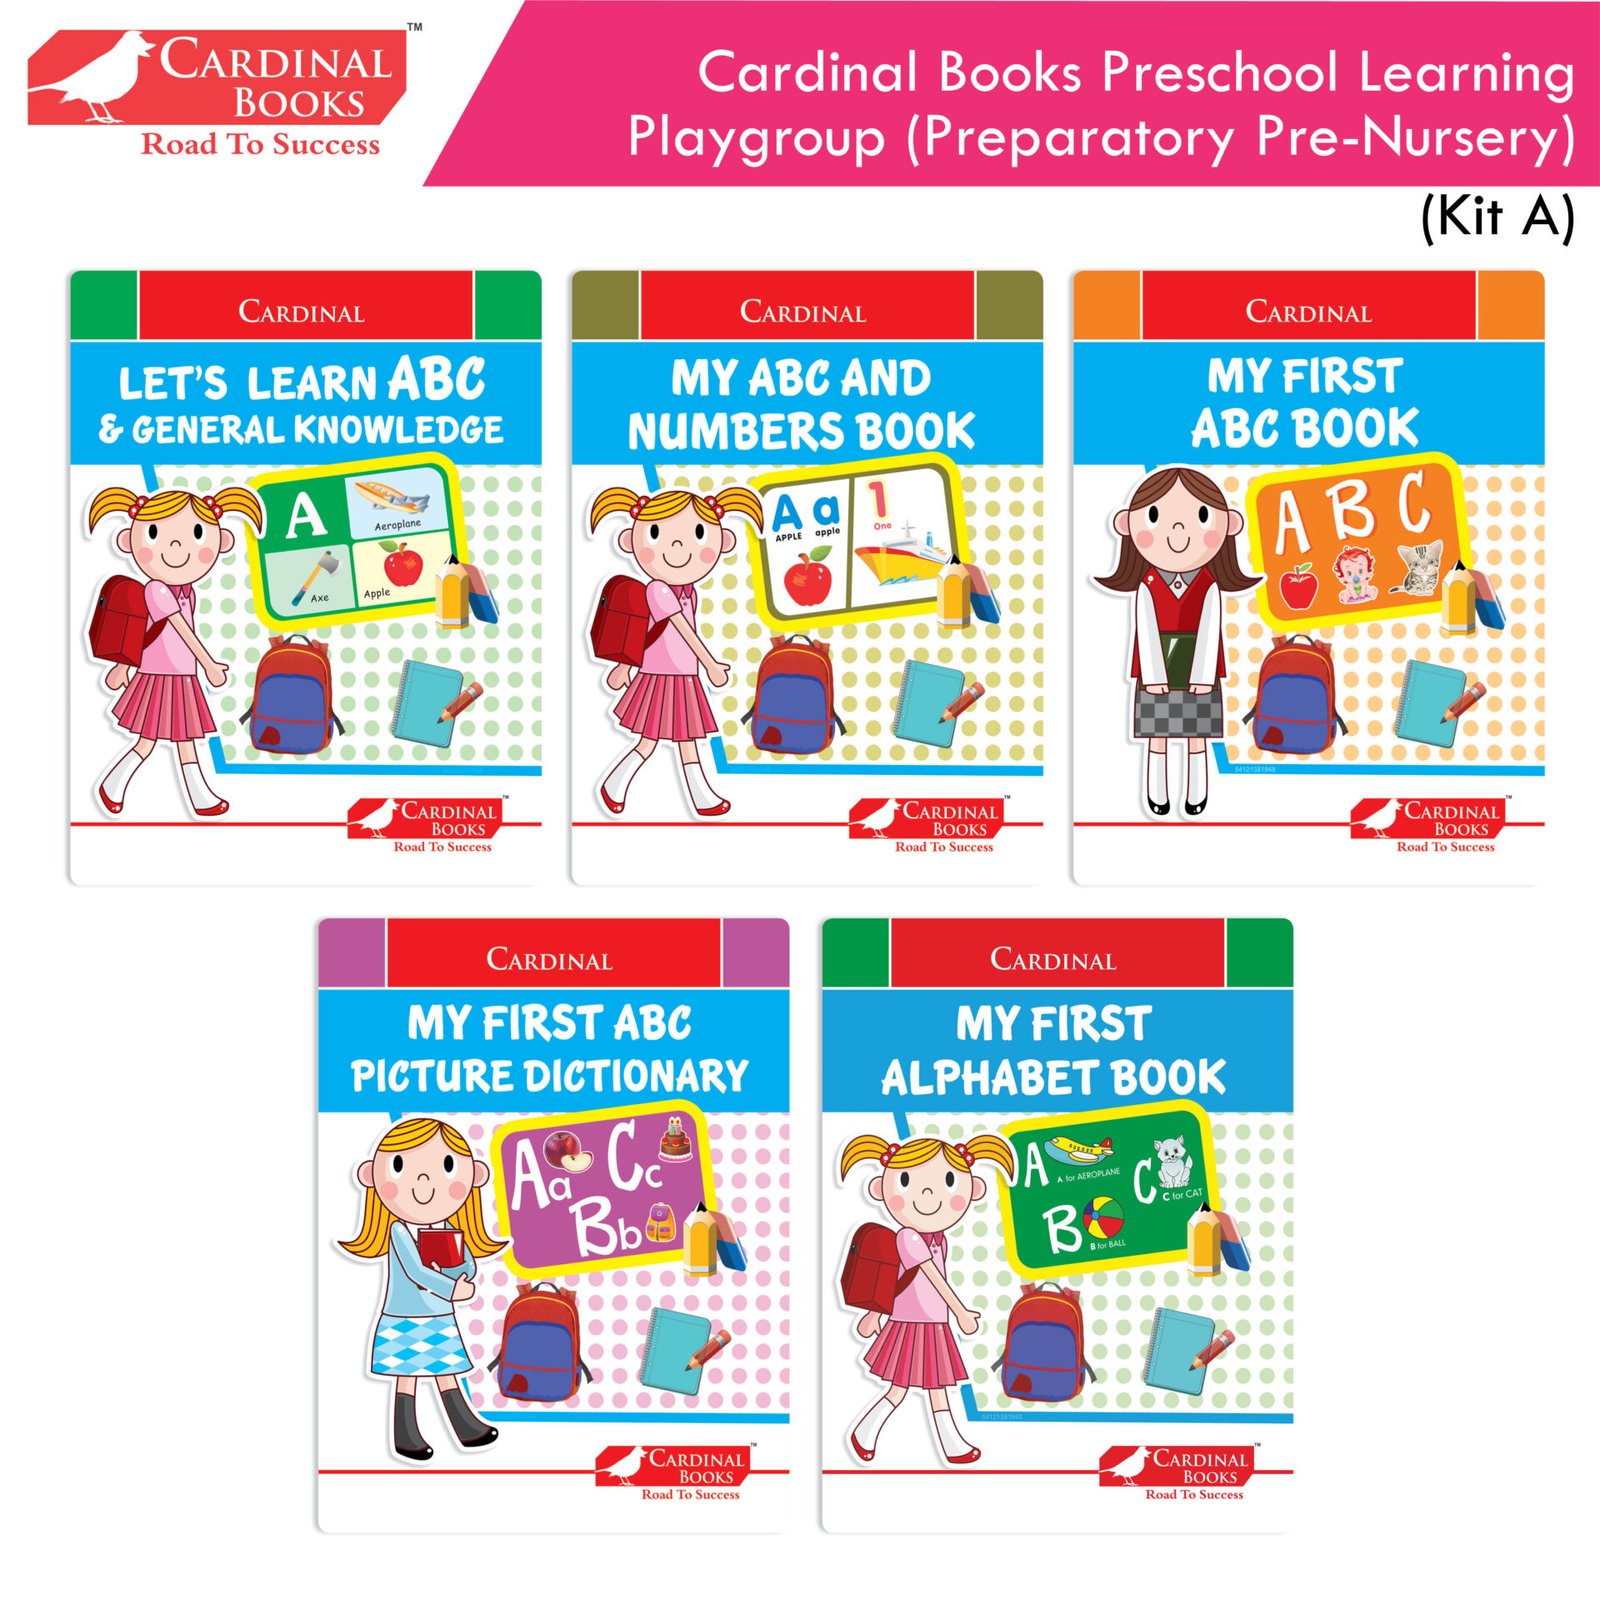 Cardinal Books Preschool Learning Playgroup Kit A (1)